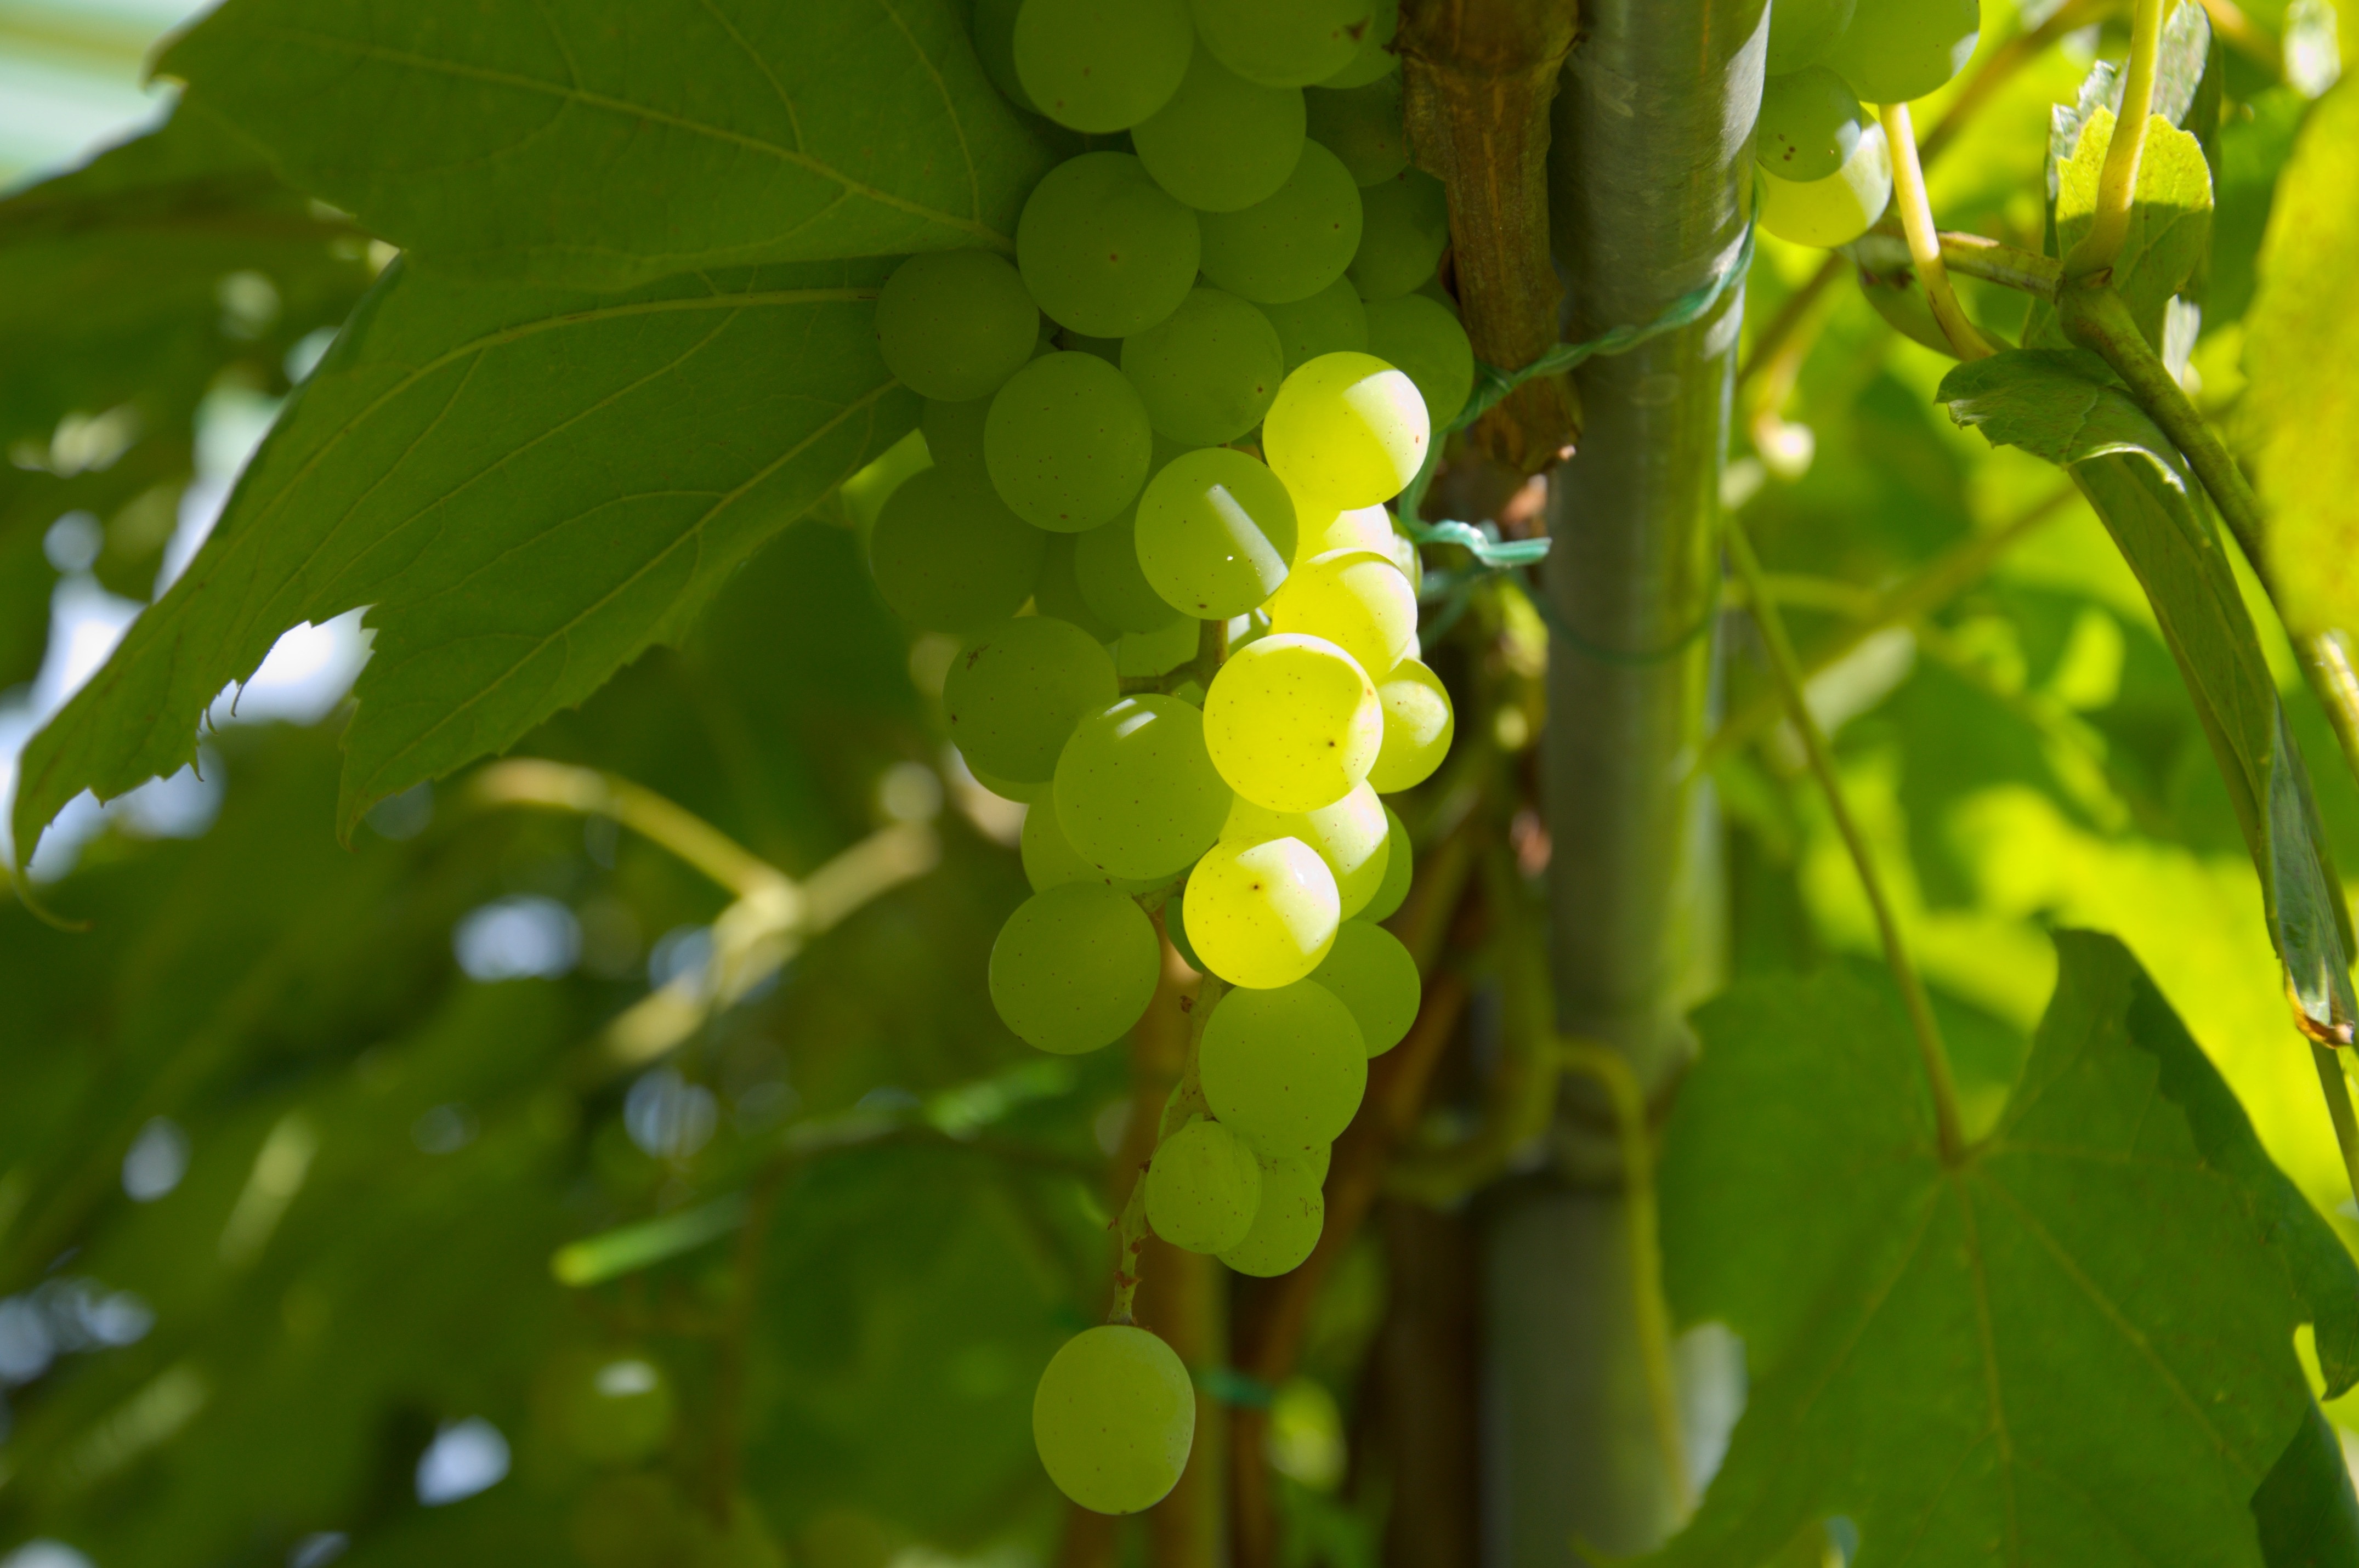 tilt shift lens photography of green grapes